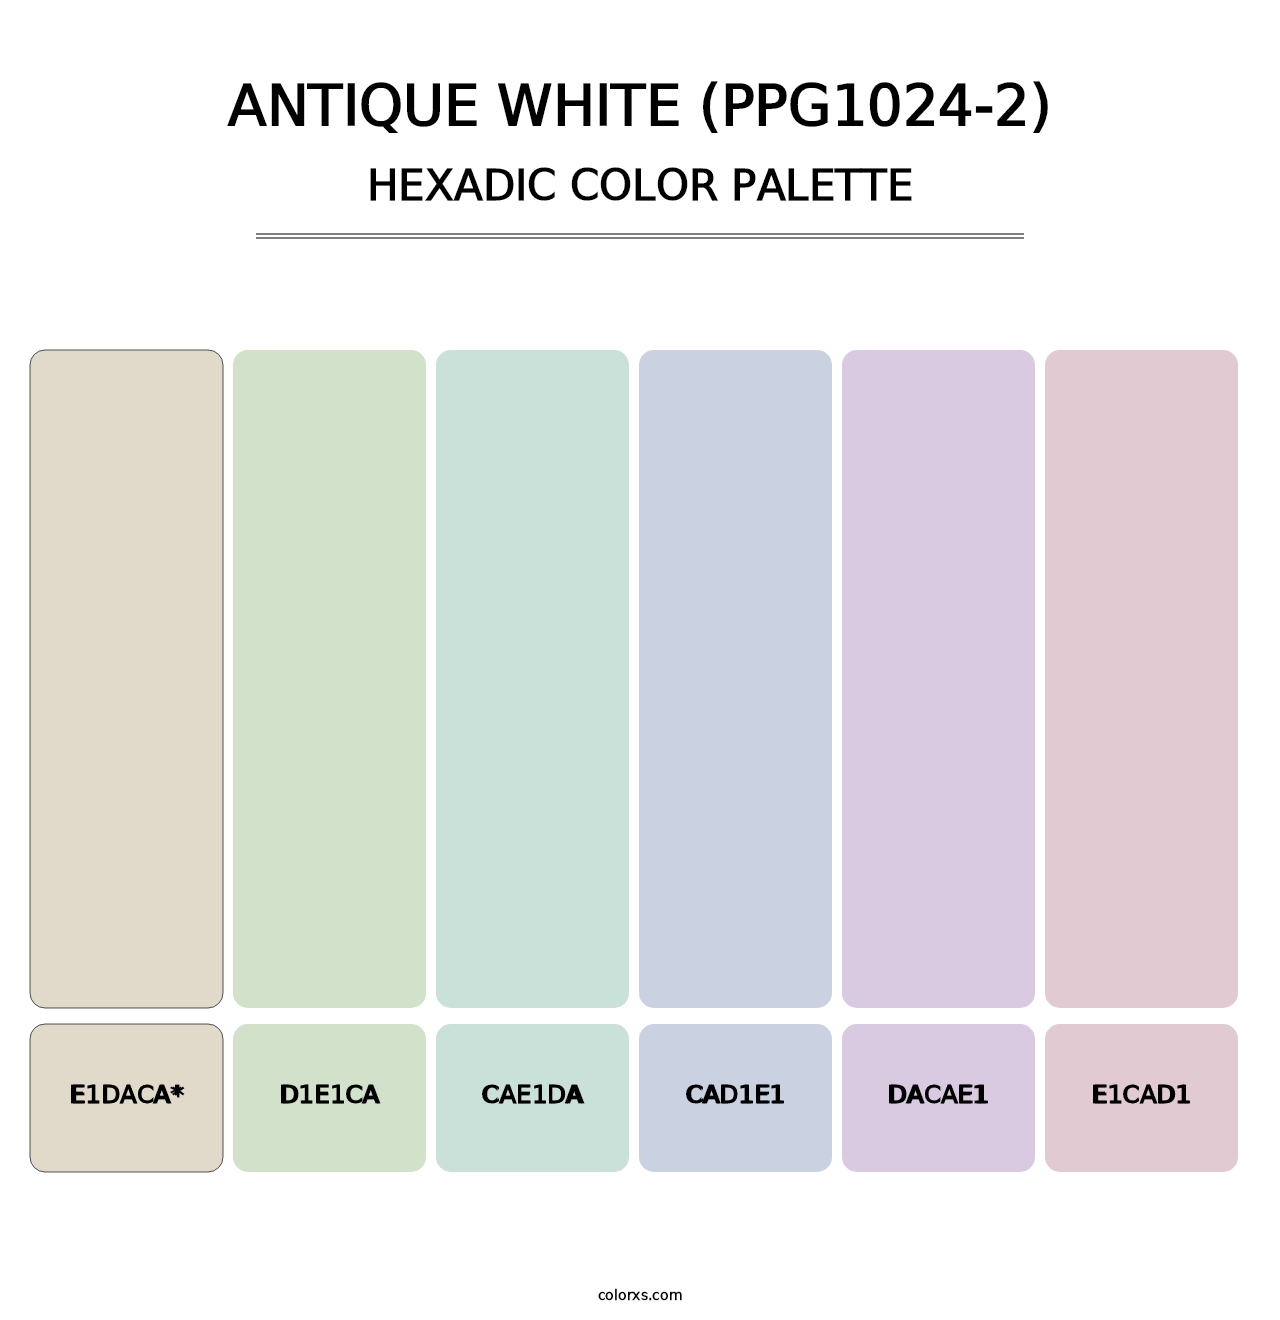 Antique White (PPG1024-2) - Hexadic Color Palette